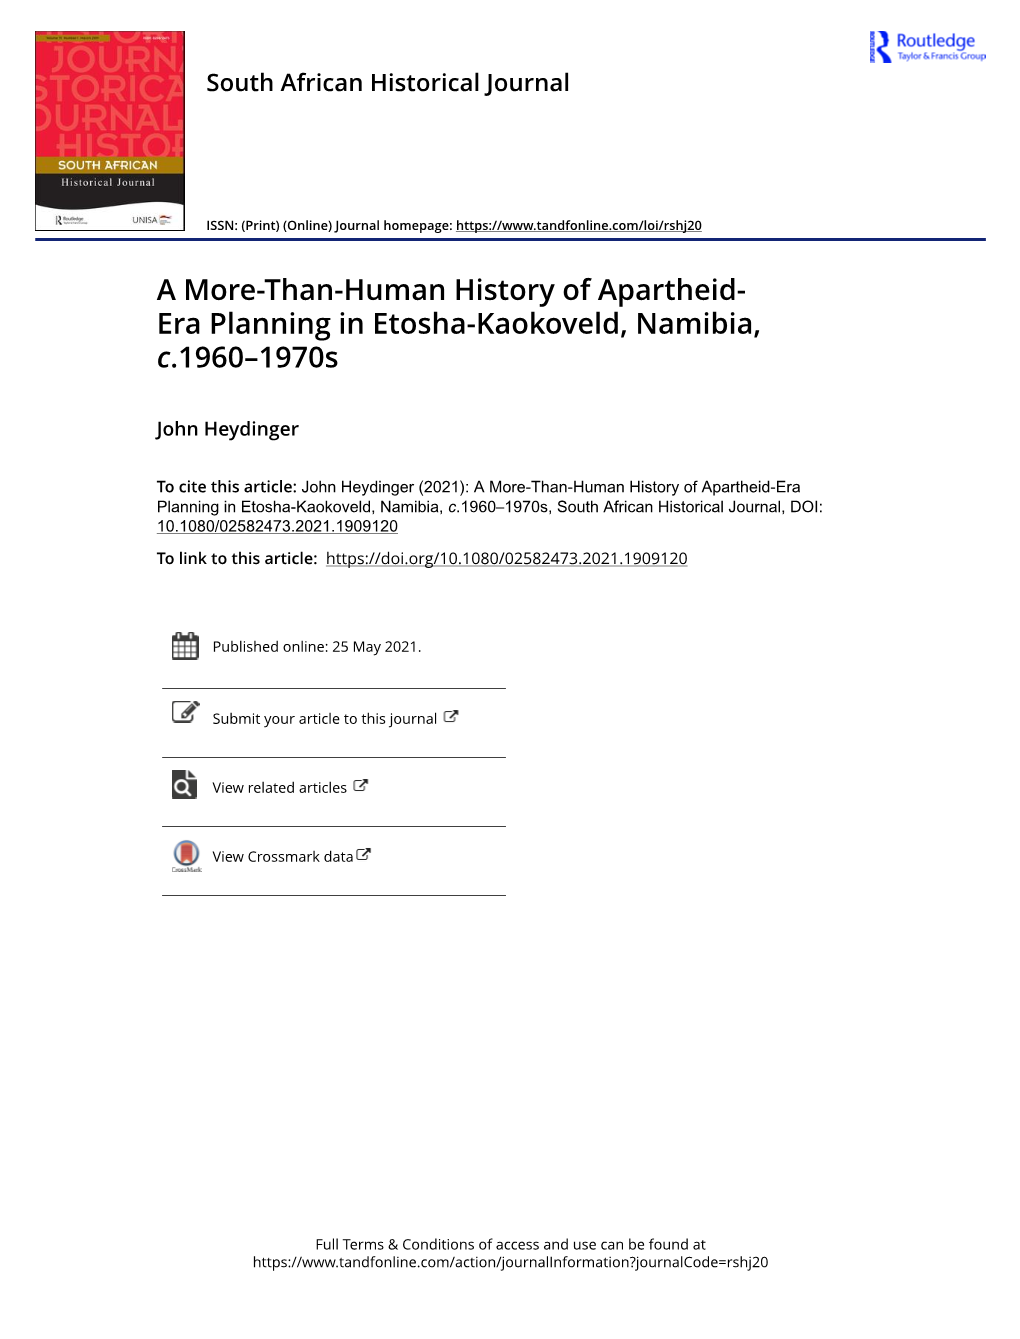 A More-Than-Human History of Apartheid-Era Planning in Etosha